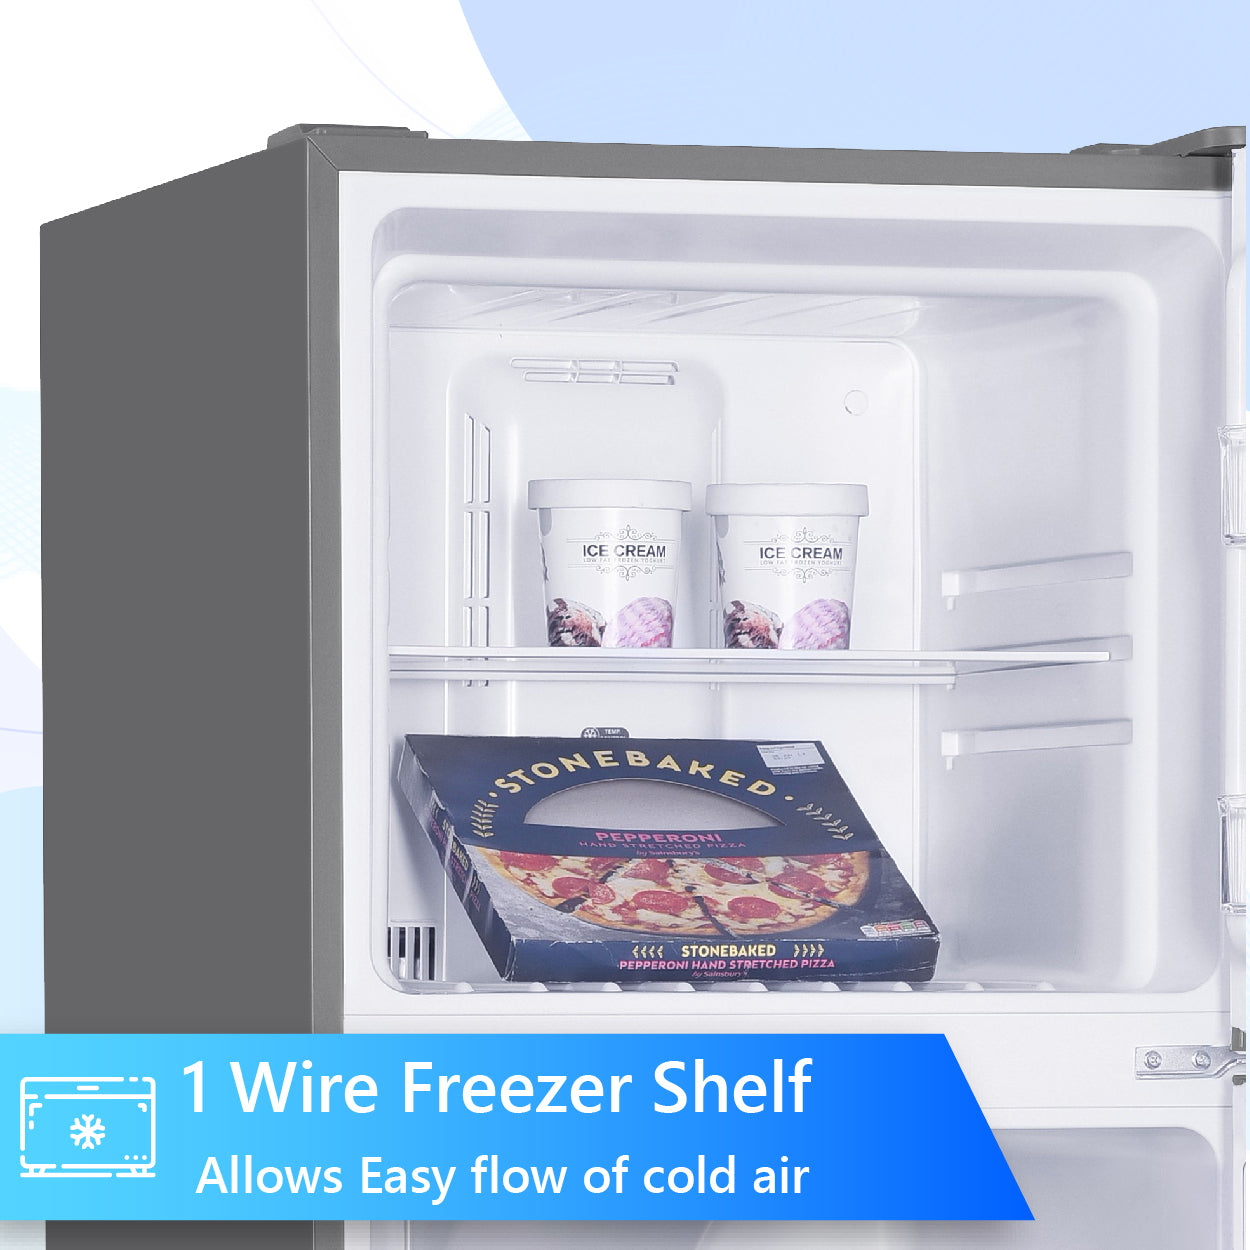 Equator Advanced Appliances Bottom Freezer Tall Refrigerator Stainless